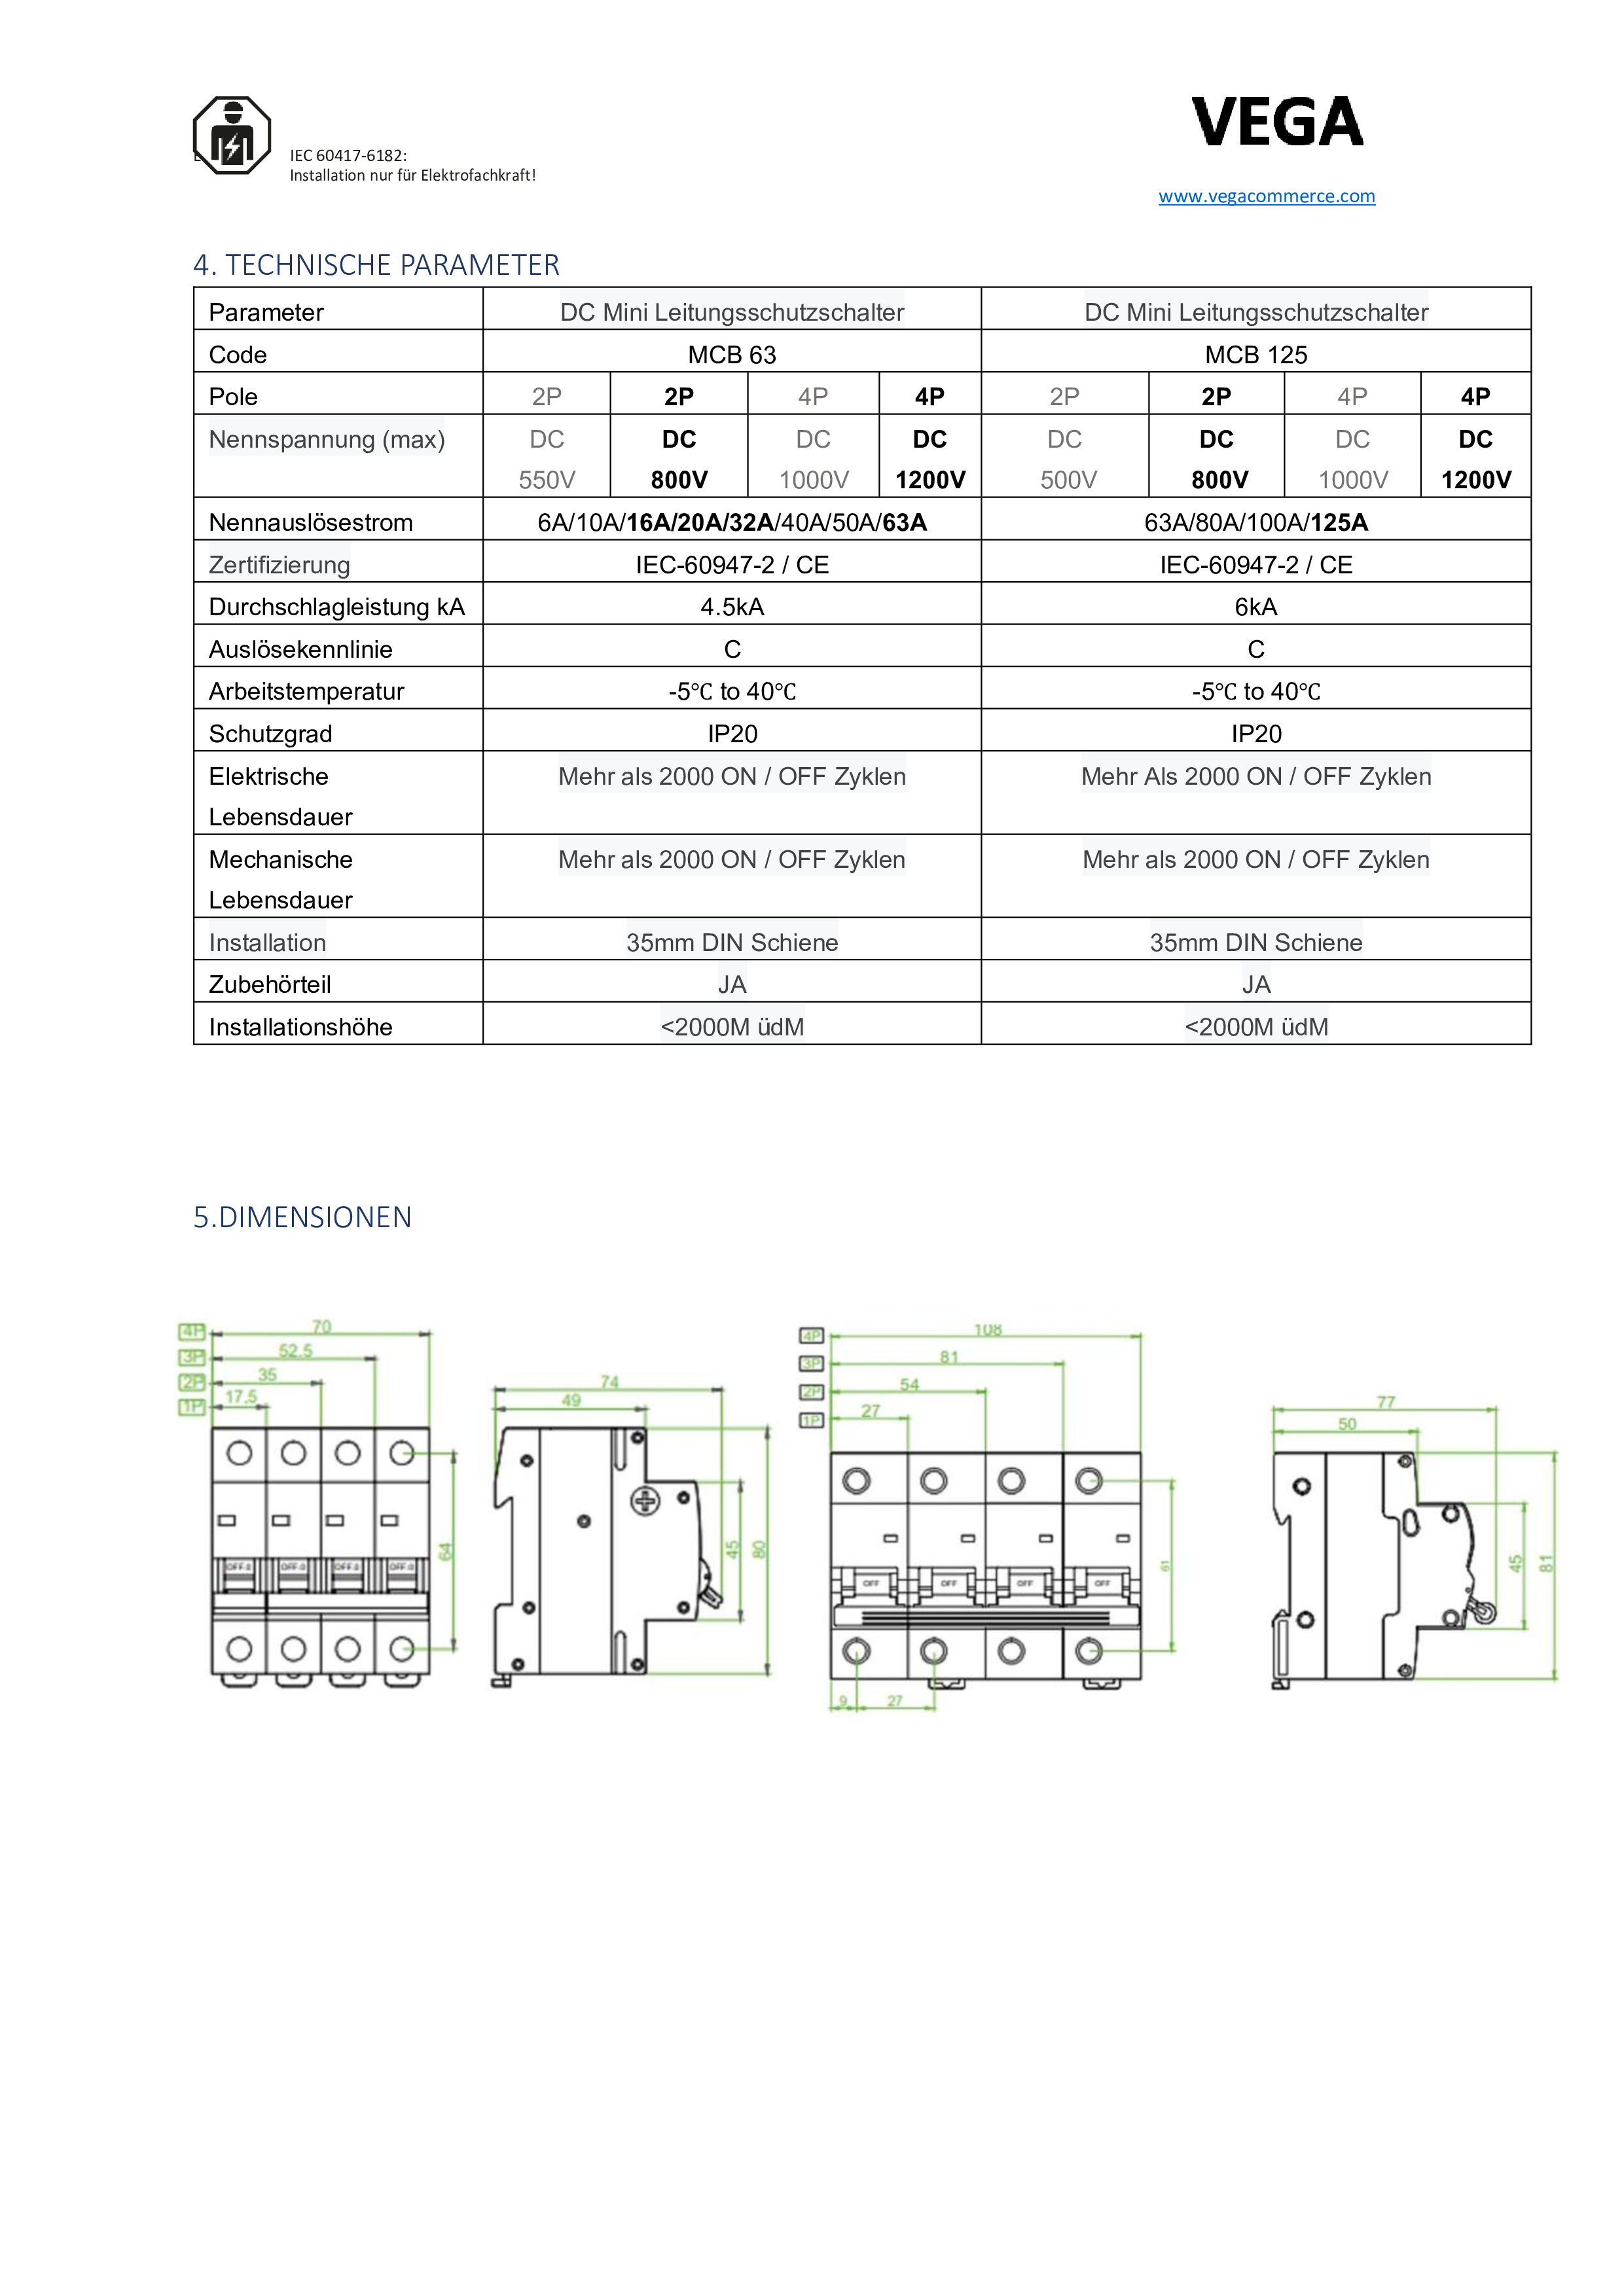 DC Trennschalter FEEO FPV-125 100A 550VDC + IP66 Gehäuse online kaufe